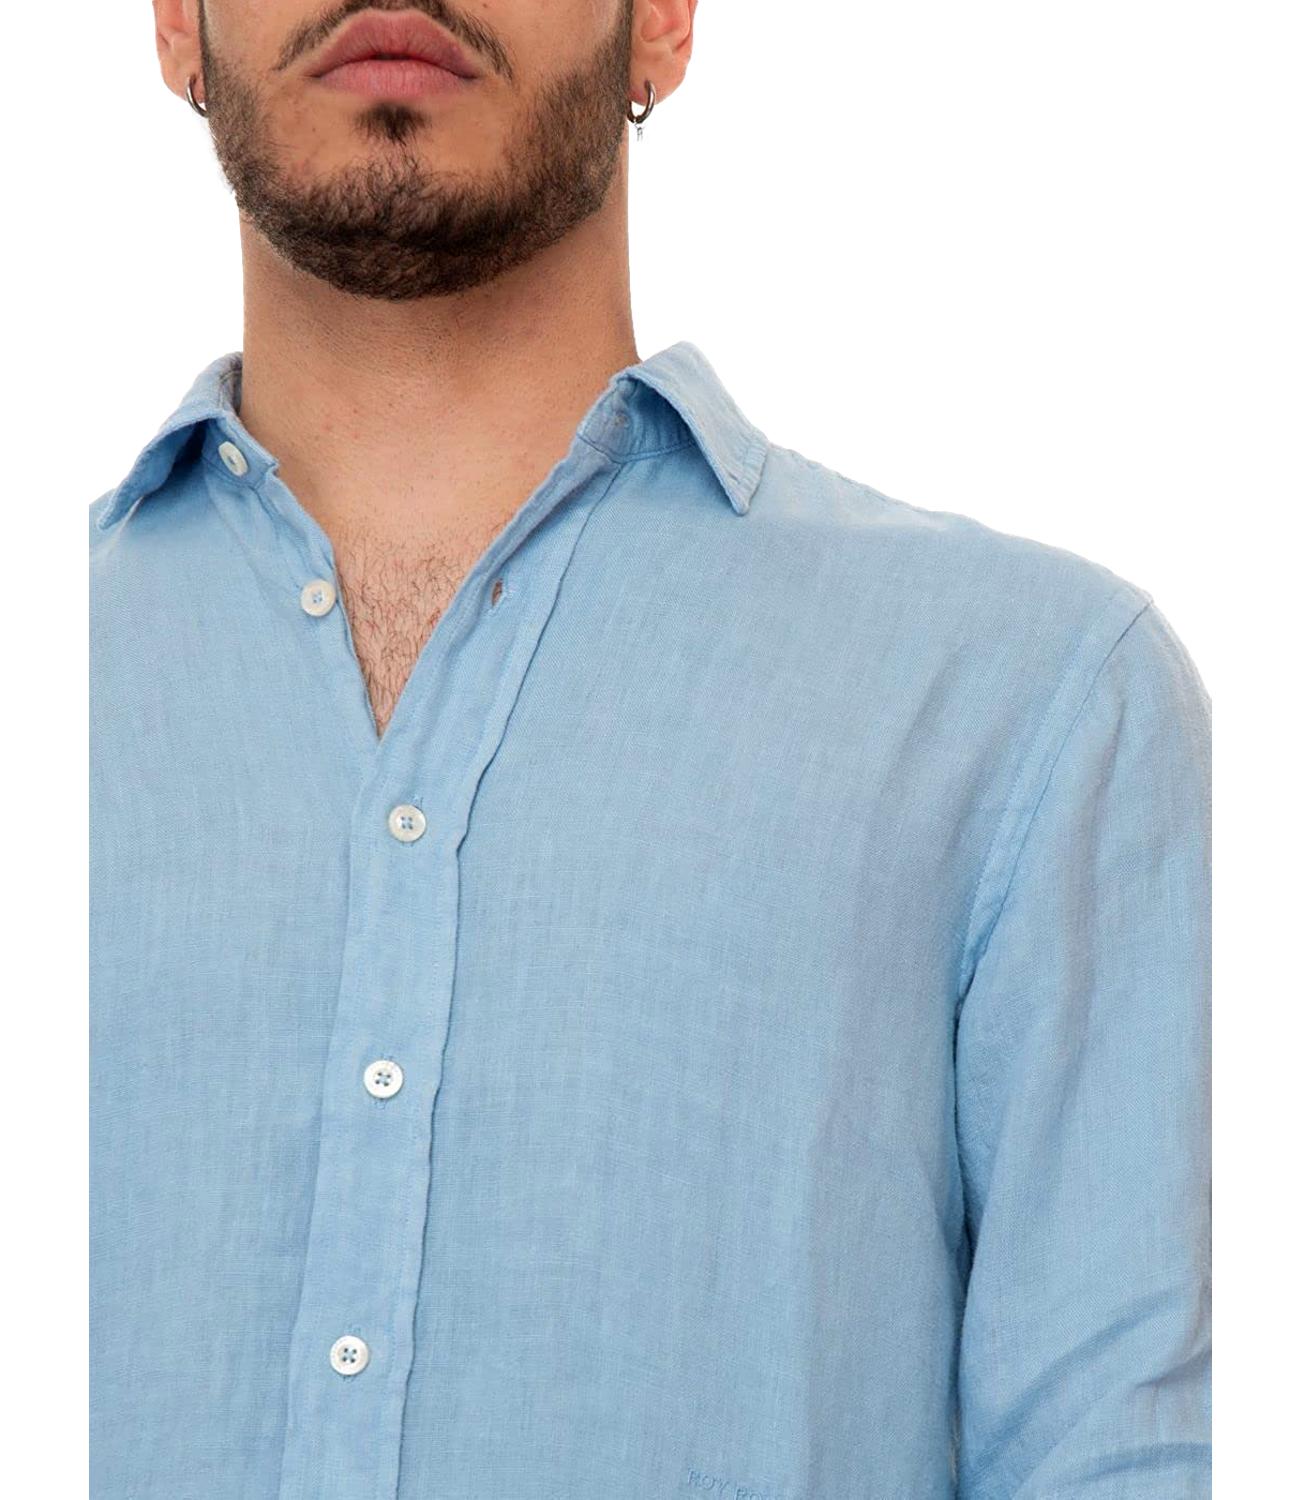 ROY ROGER'S sky blue linen shirt with collar